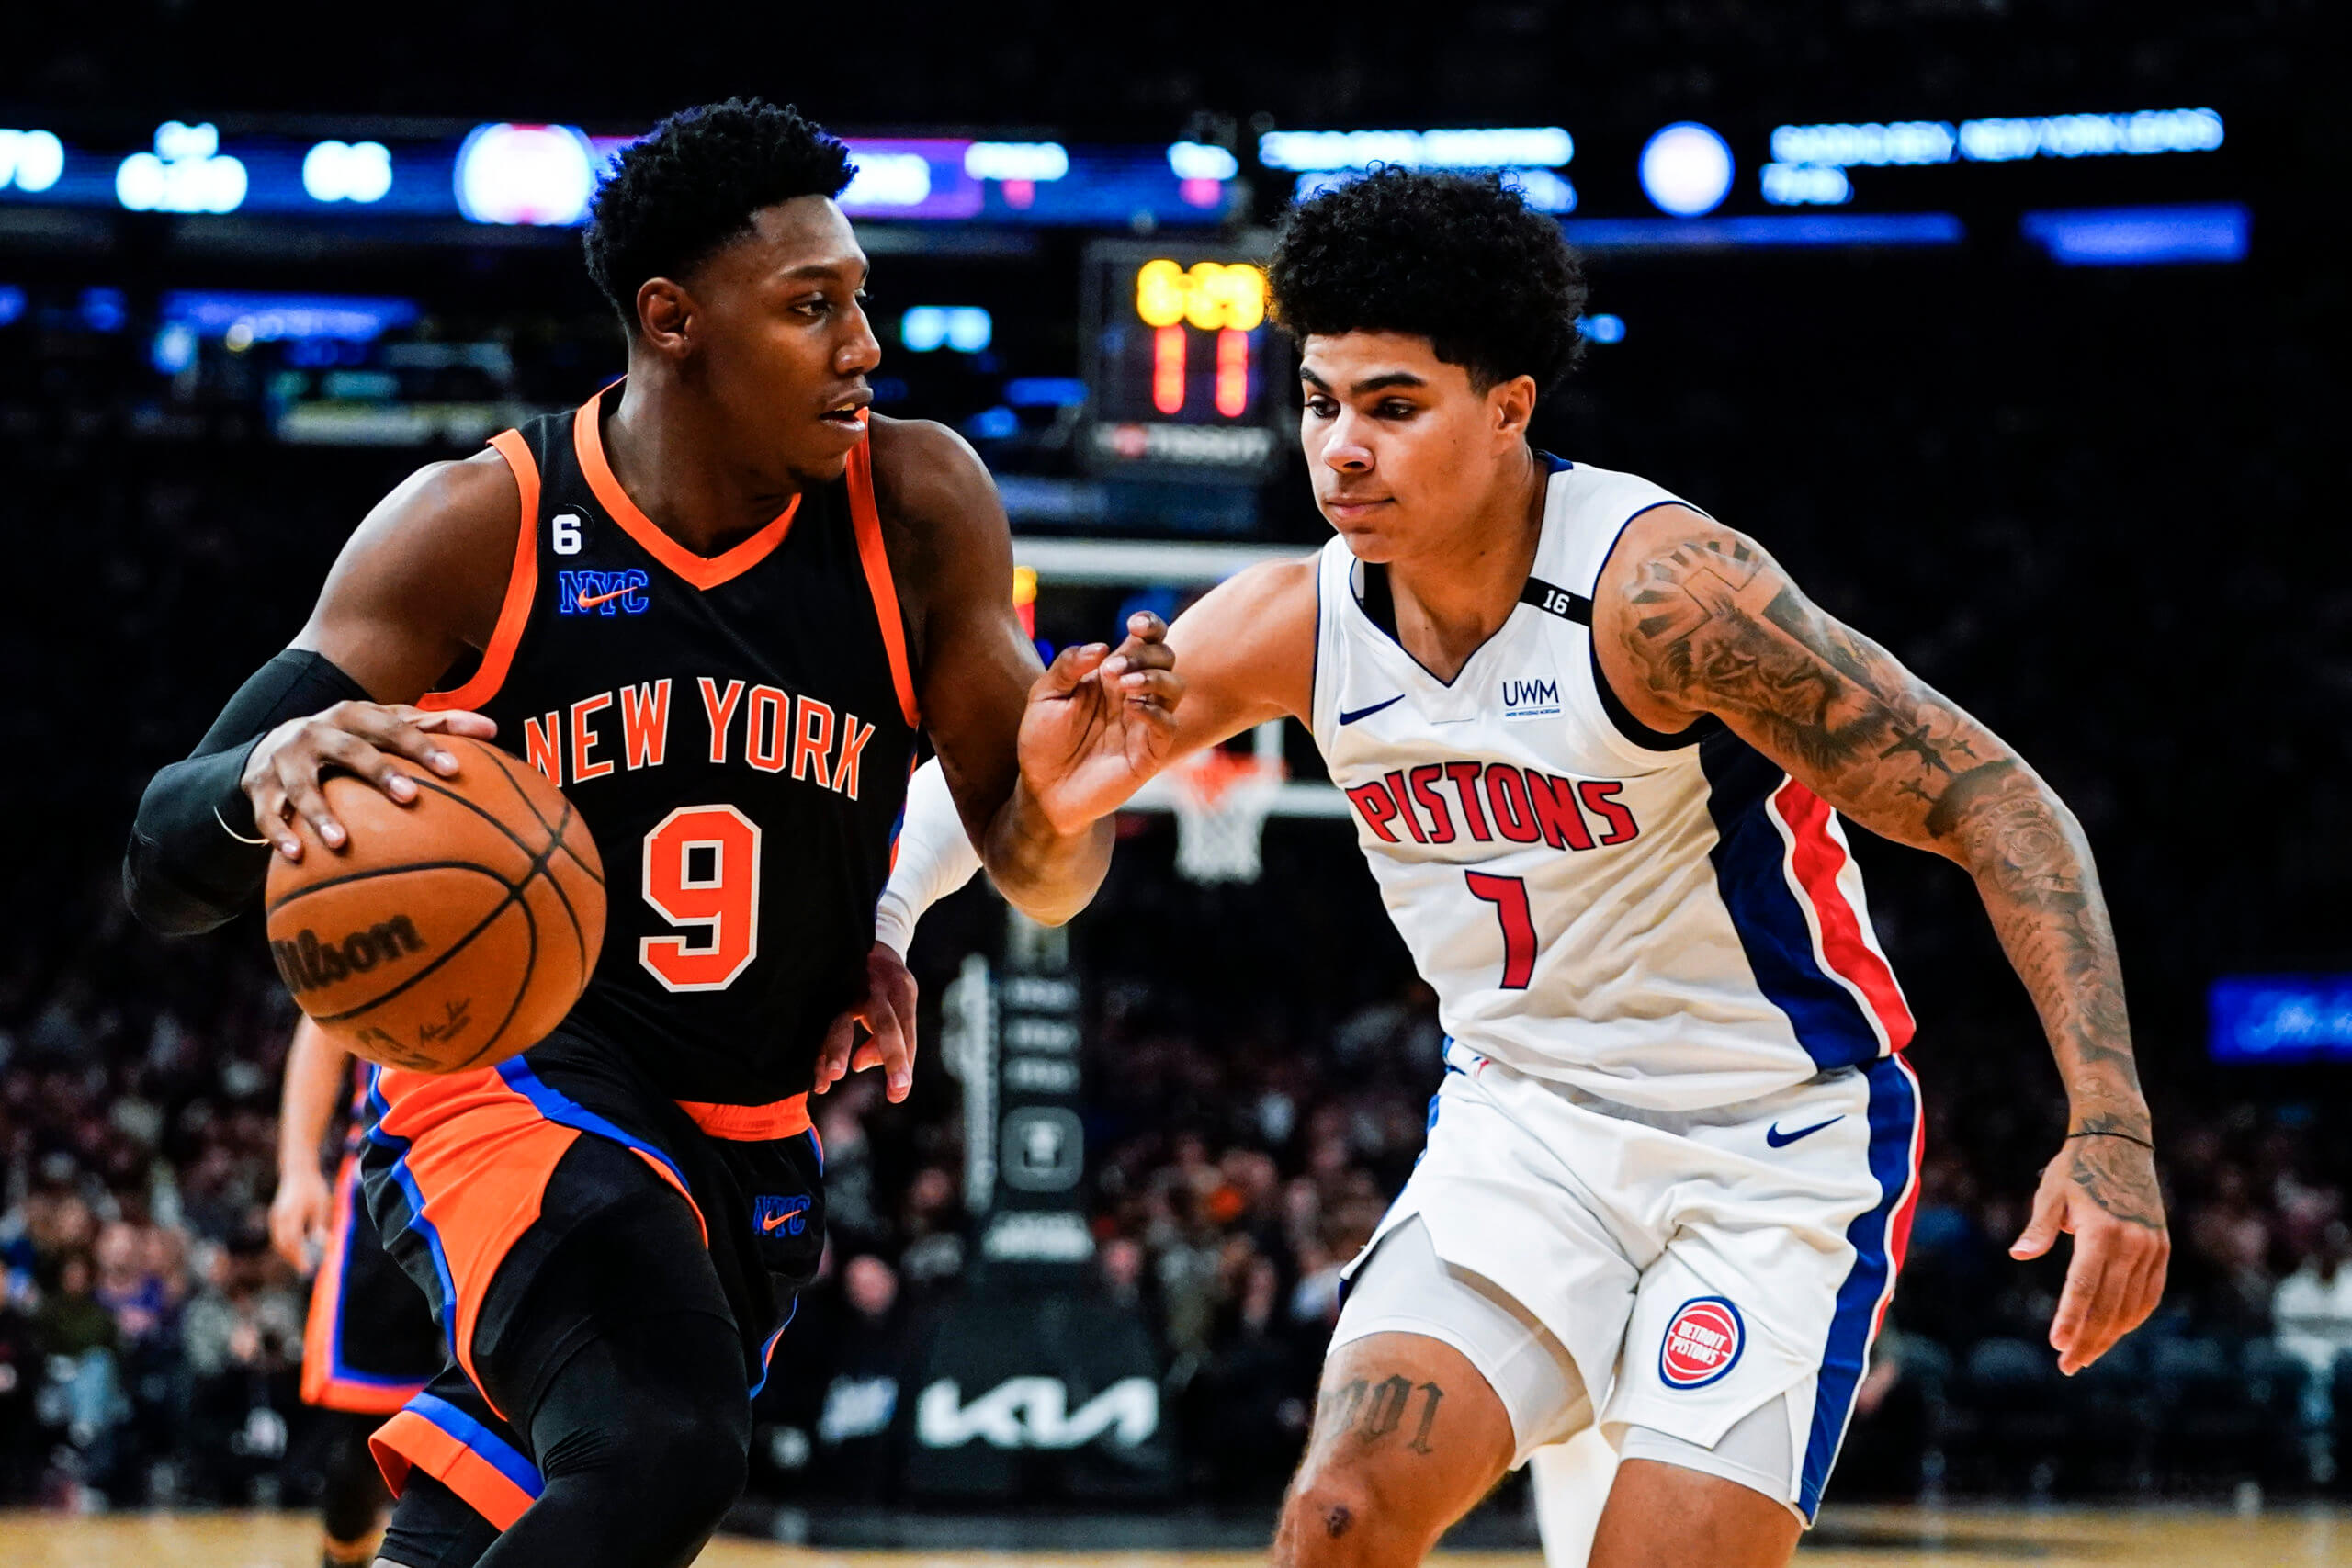 Knicks bringing on young promise in Duane Washington Jr.